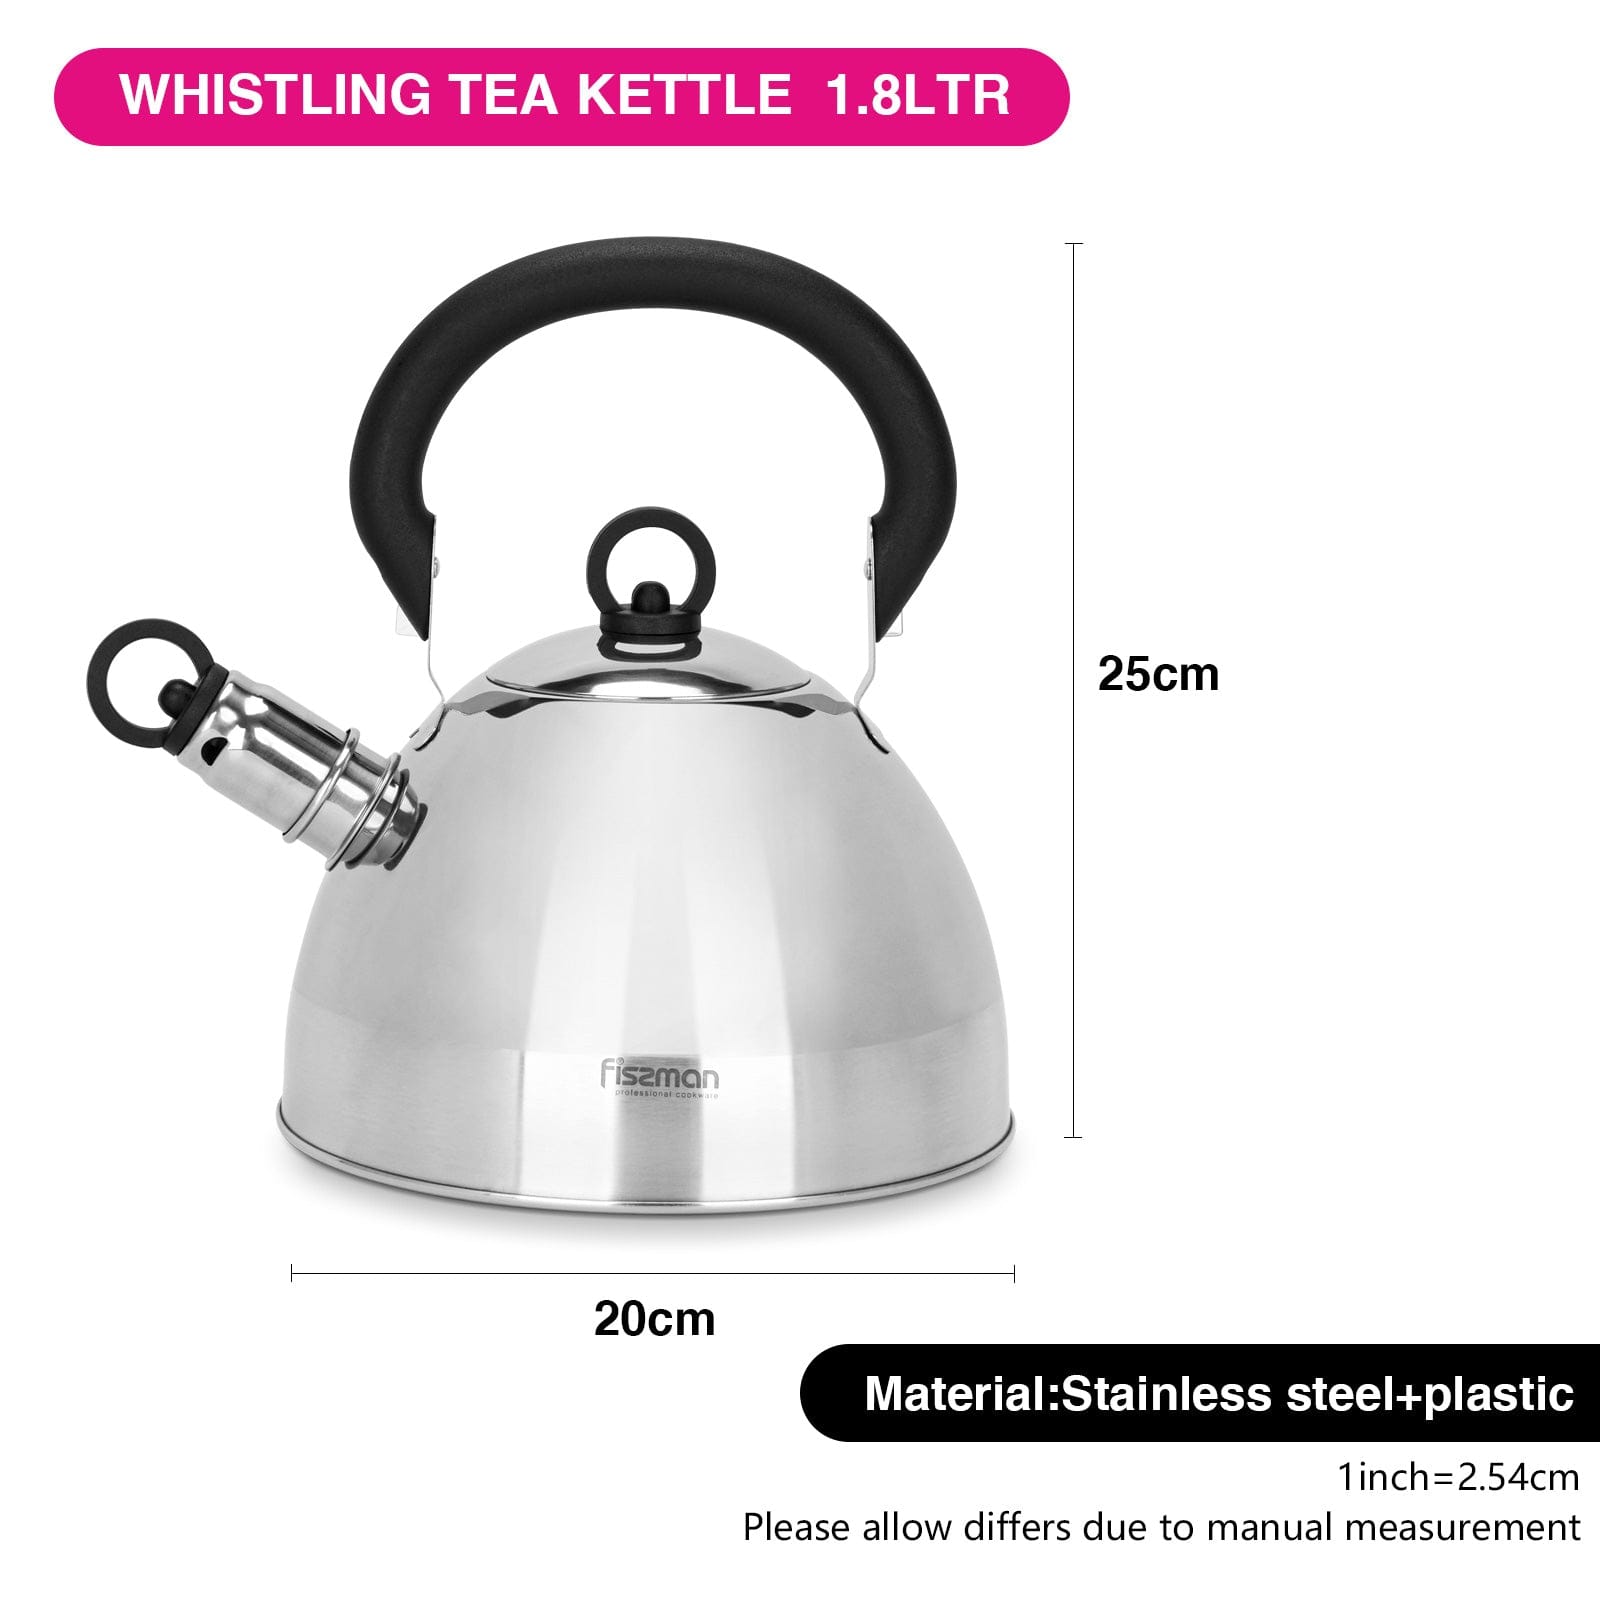 Fissman Whistling Tea Kettle Stainless Steel Silver 1.8L